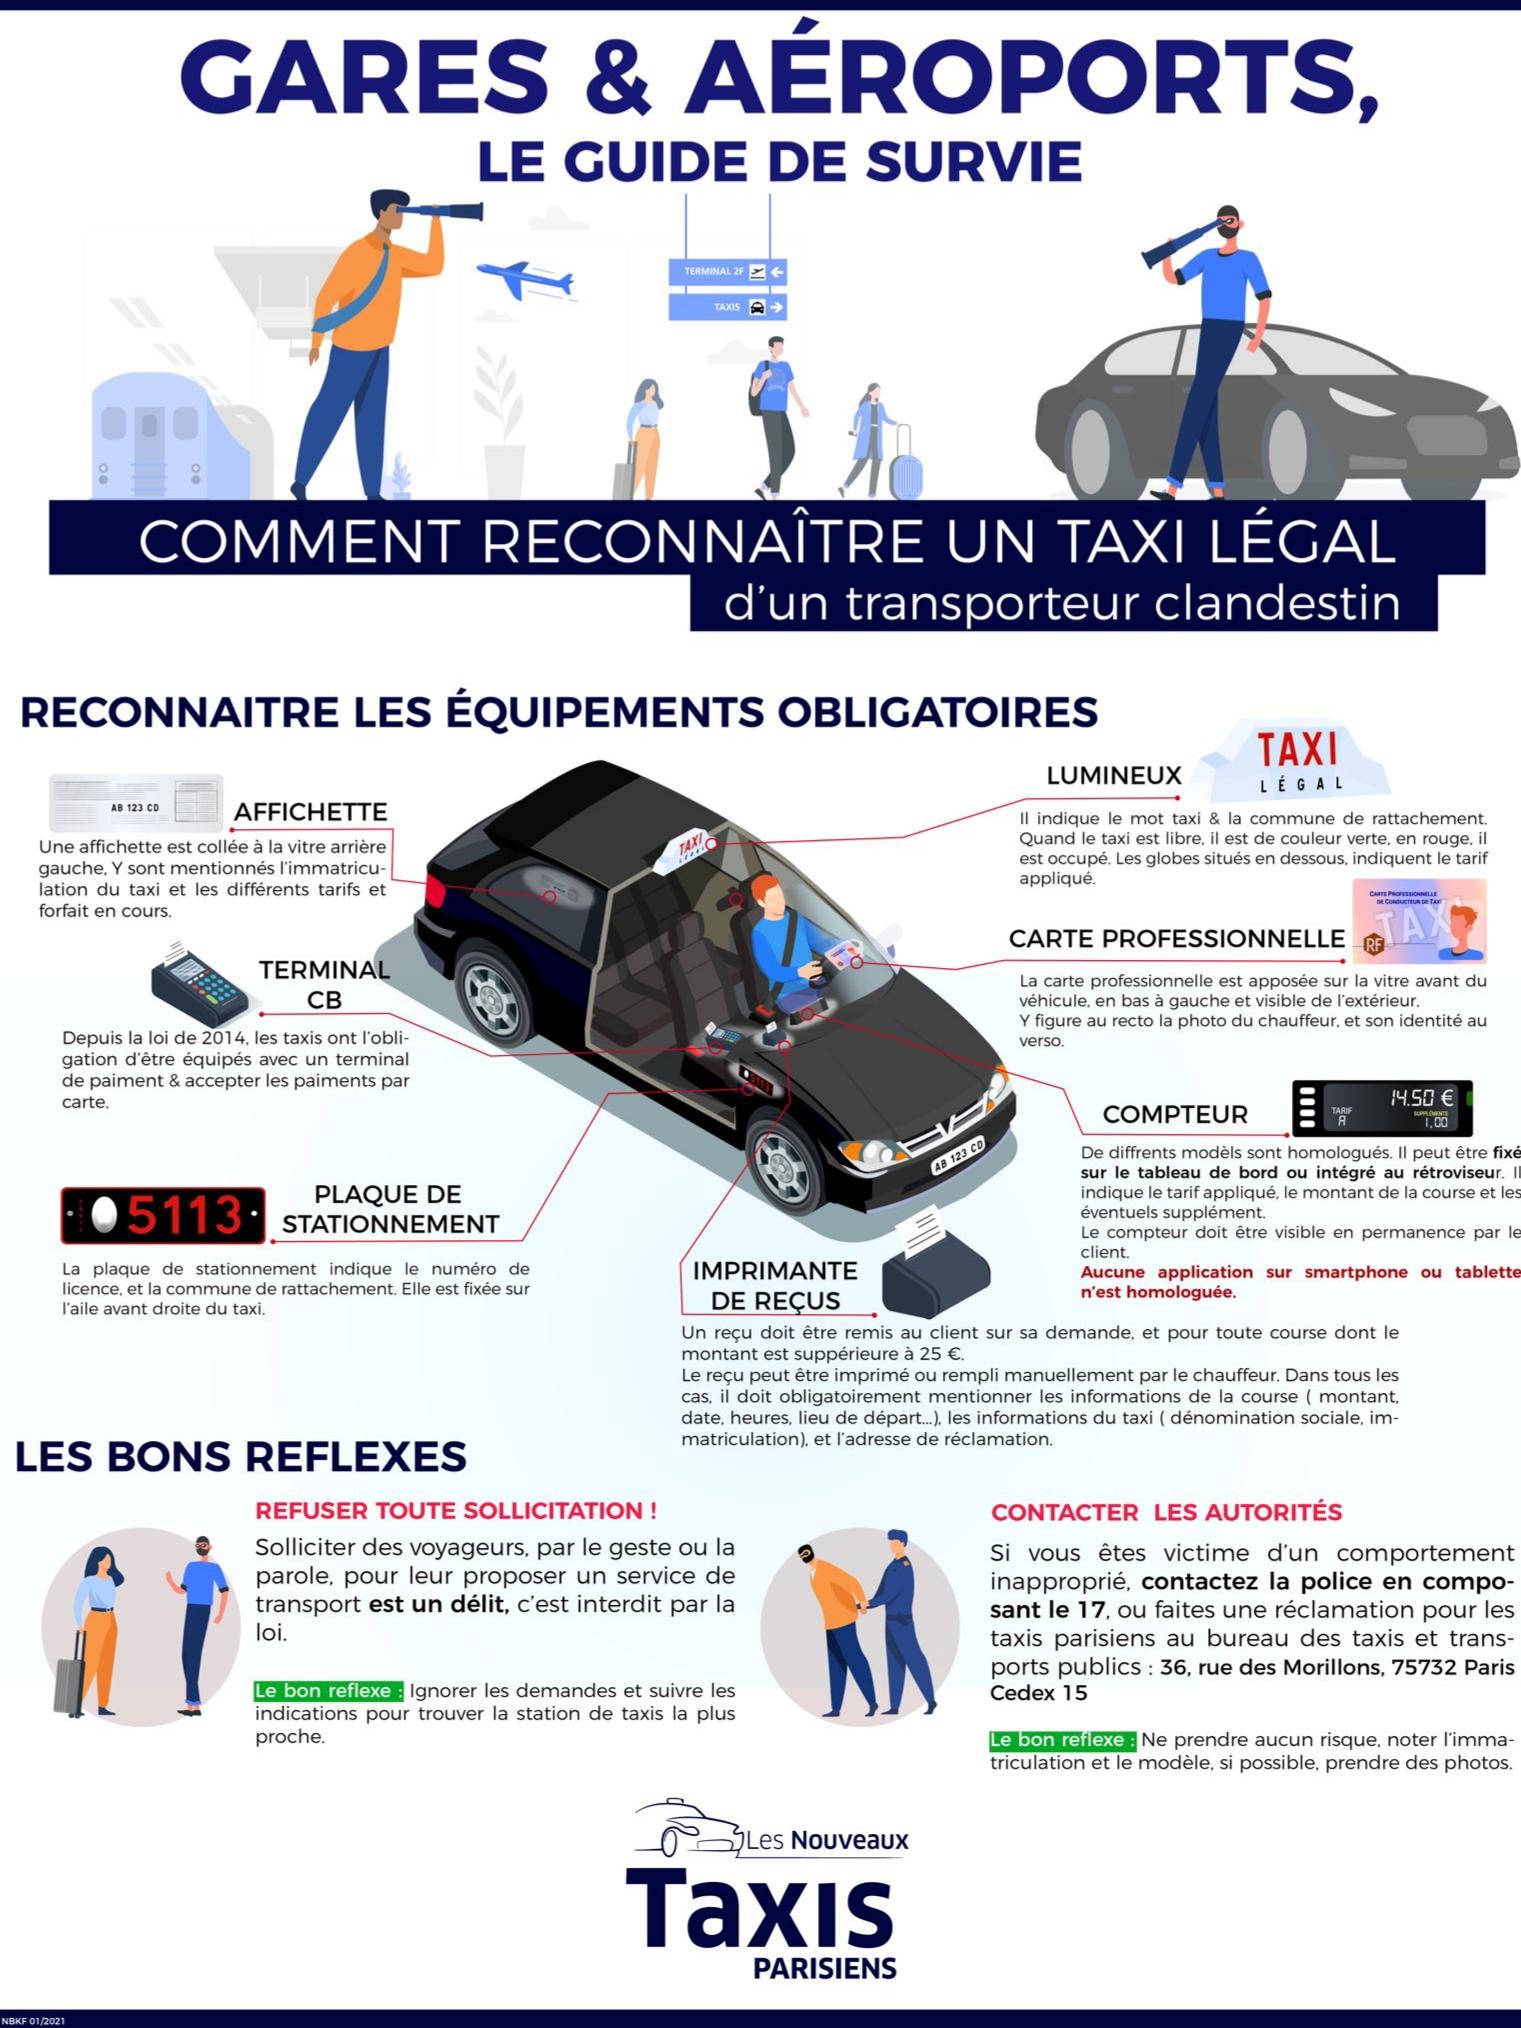 How to recognize a licensed Taxi in Paris - Le forum des Taxis Parisiens